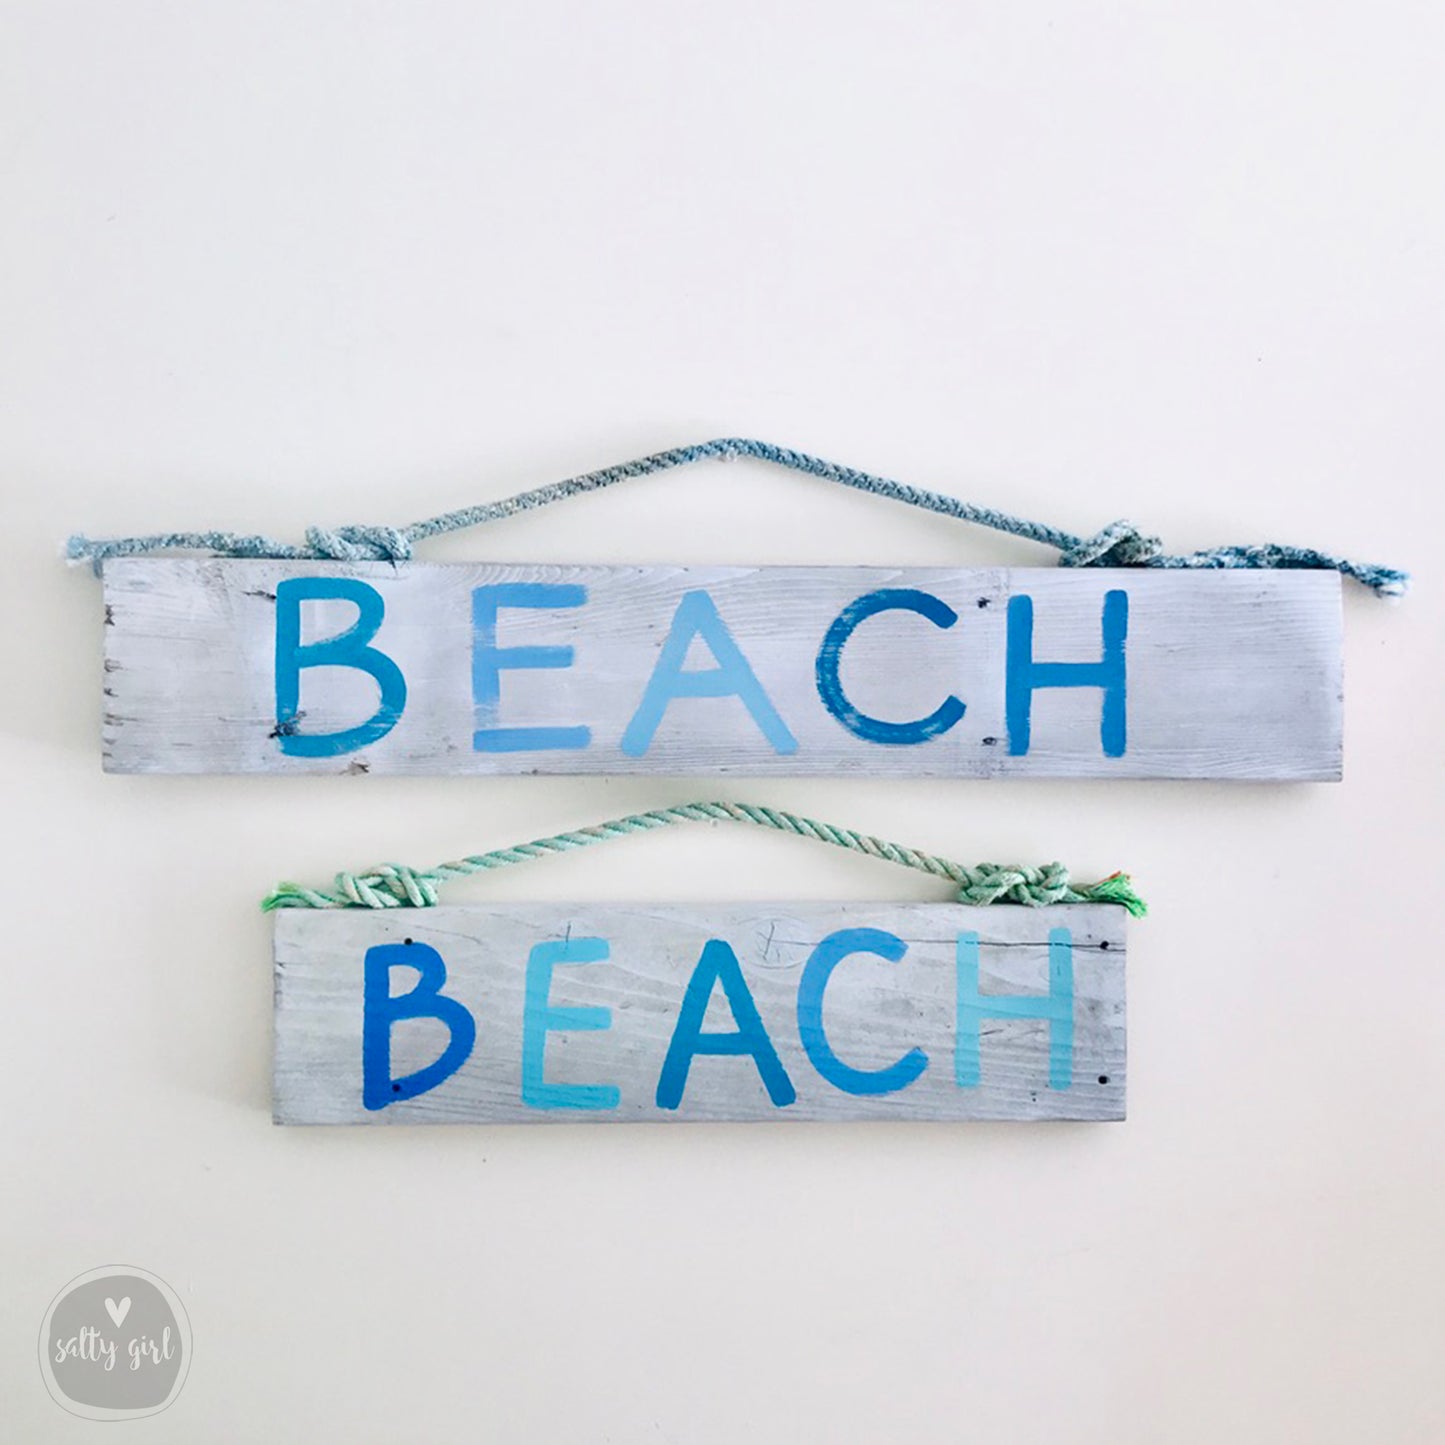 Driftwood Beach Sign - Wooden Beach Sign with Fishing Rope Hanger - Beach Themed Decor - Coastal Art